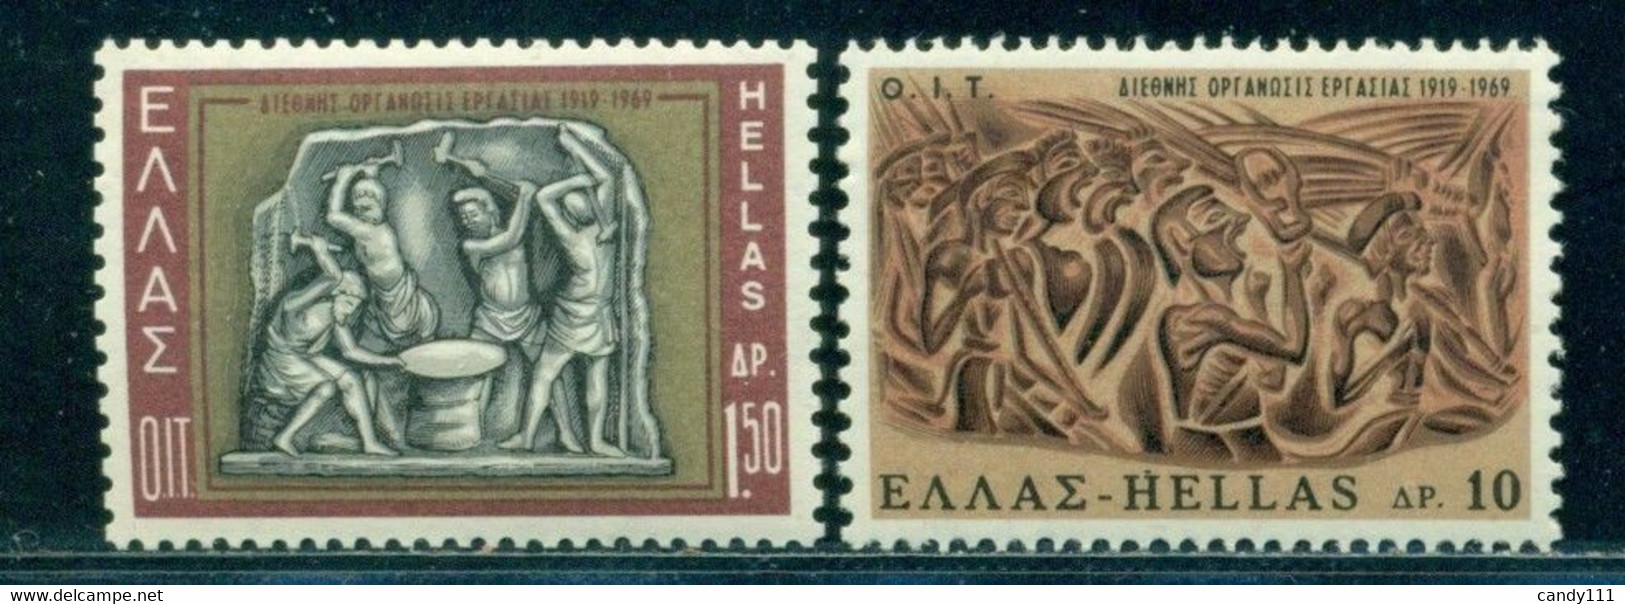 1969 ILO, Intl Labor Org, God Hephaestus And Cyclops, Labor Holiday, Greece, Mi. 997, MNH - OIT